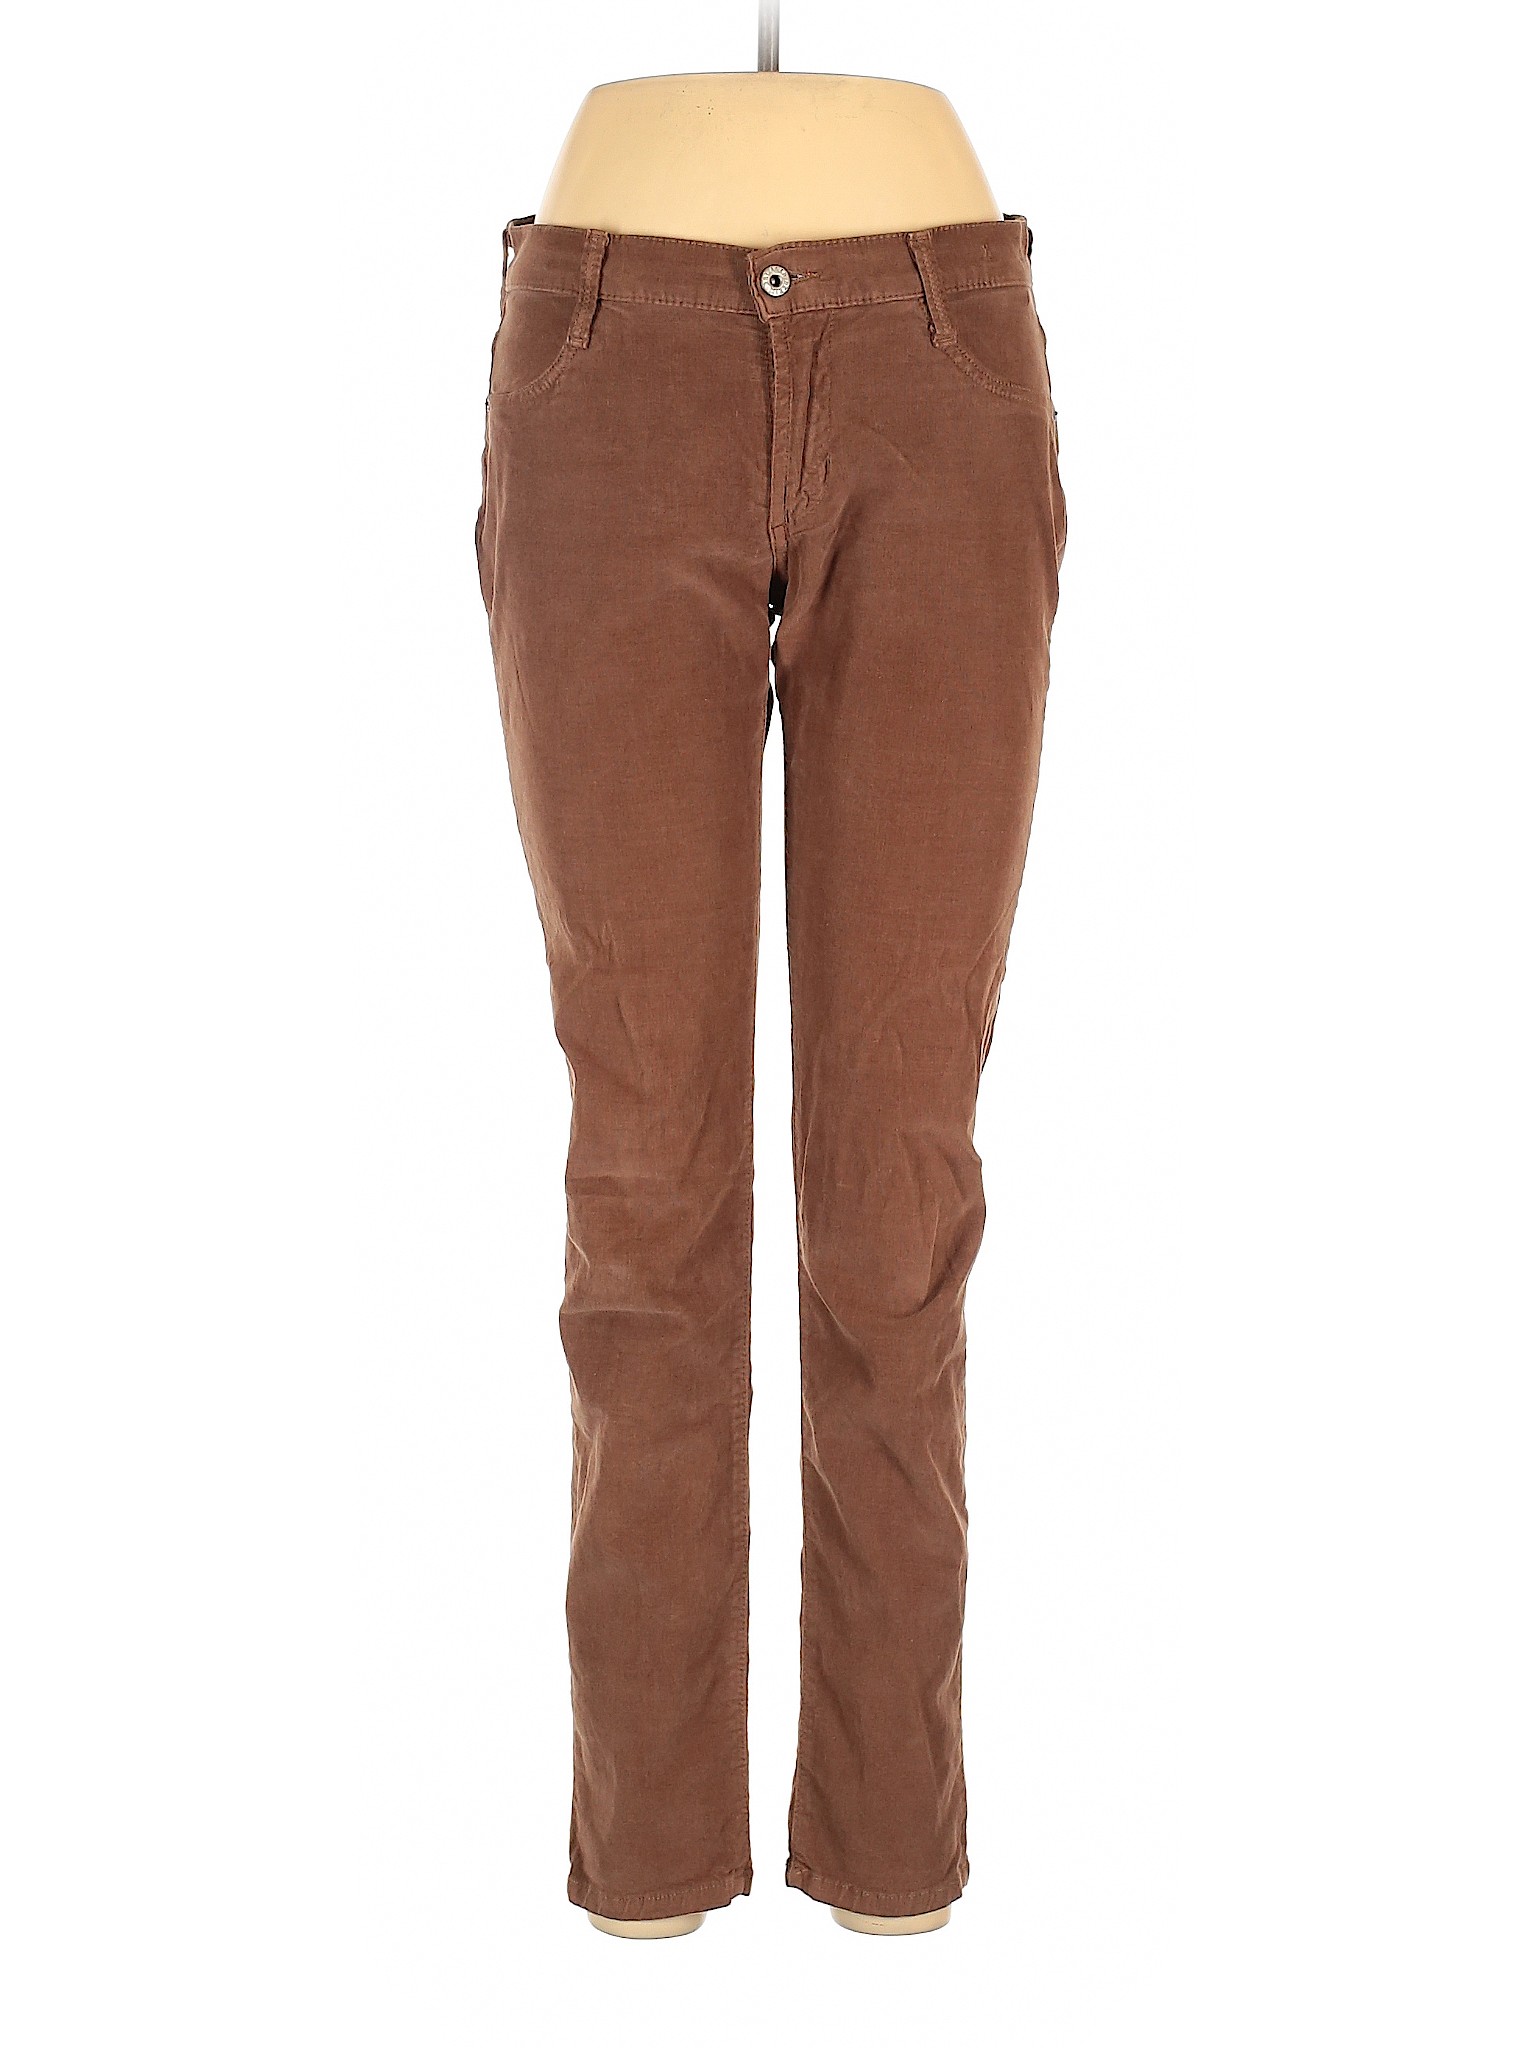 James Jeans Women Brown Cords 29W | eBay